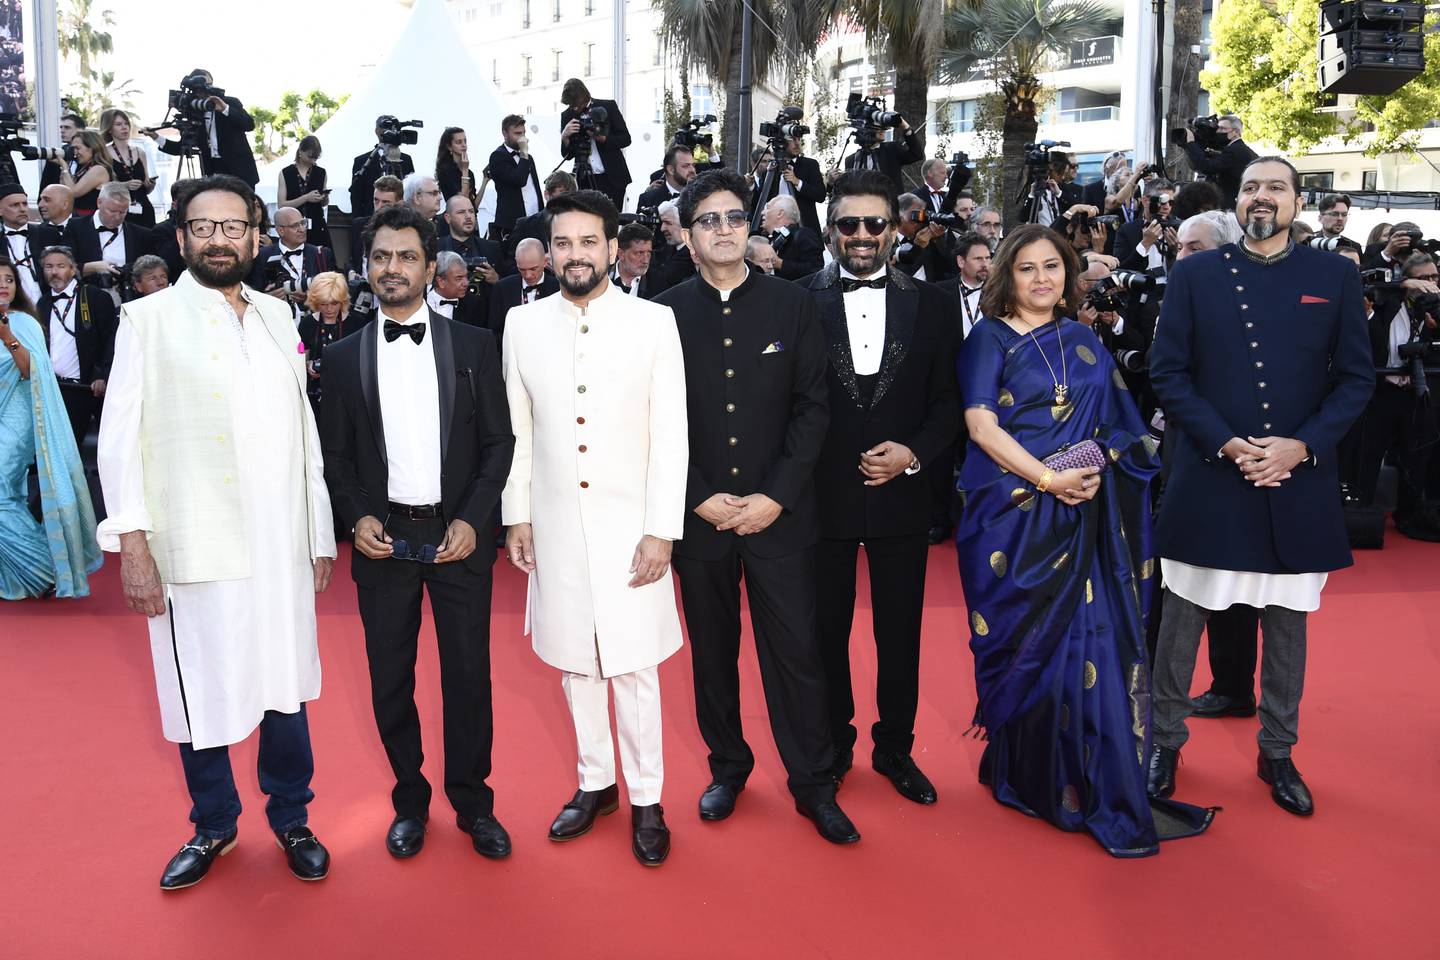 Director Shekhar Kapur, actor Nawazuddin Siddiqui, Indian minister Anurag Thakur, musician Prasoon Joshi, actor R Madhavan, politician Vani Tripathi and musician Ricky Kej on the opening night of the Cannes Film Festival. Getty Images